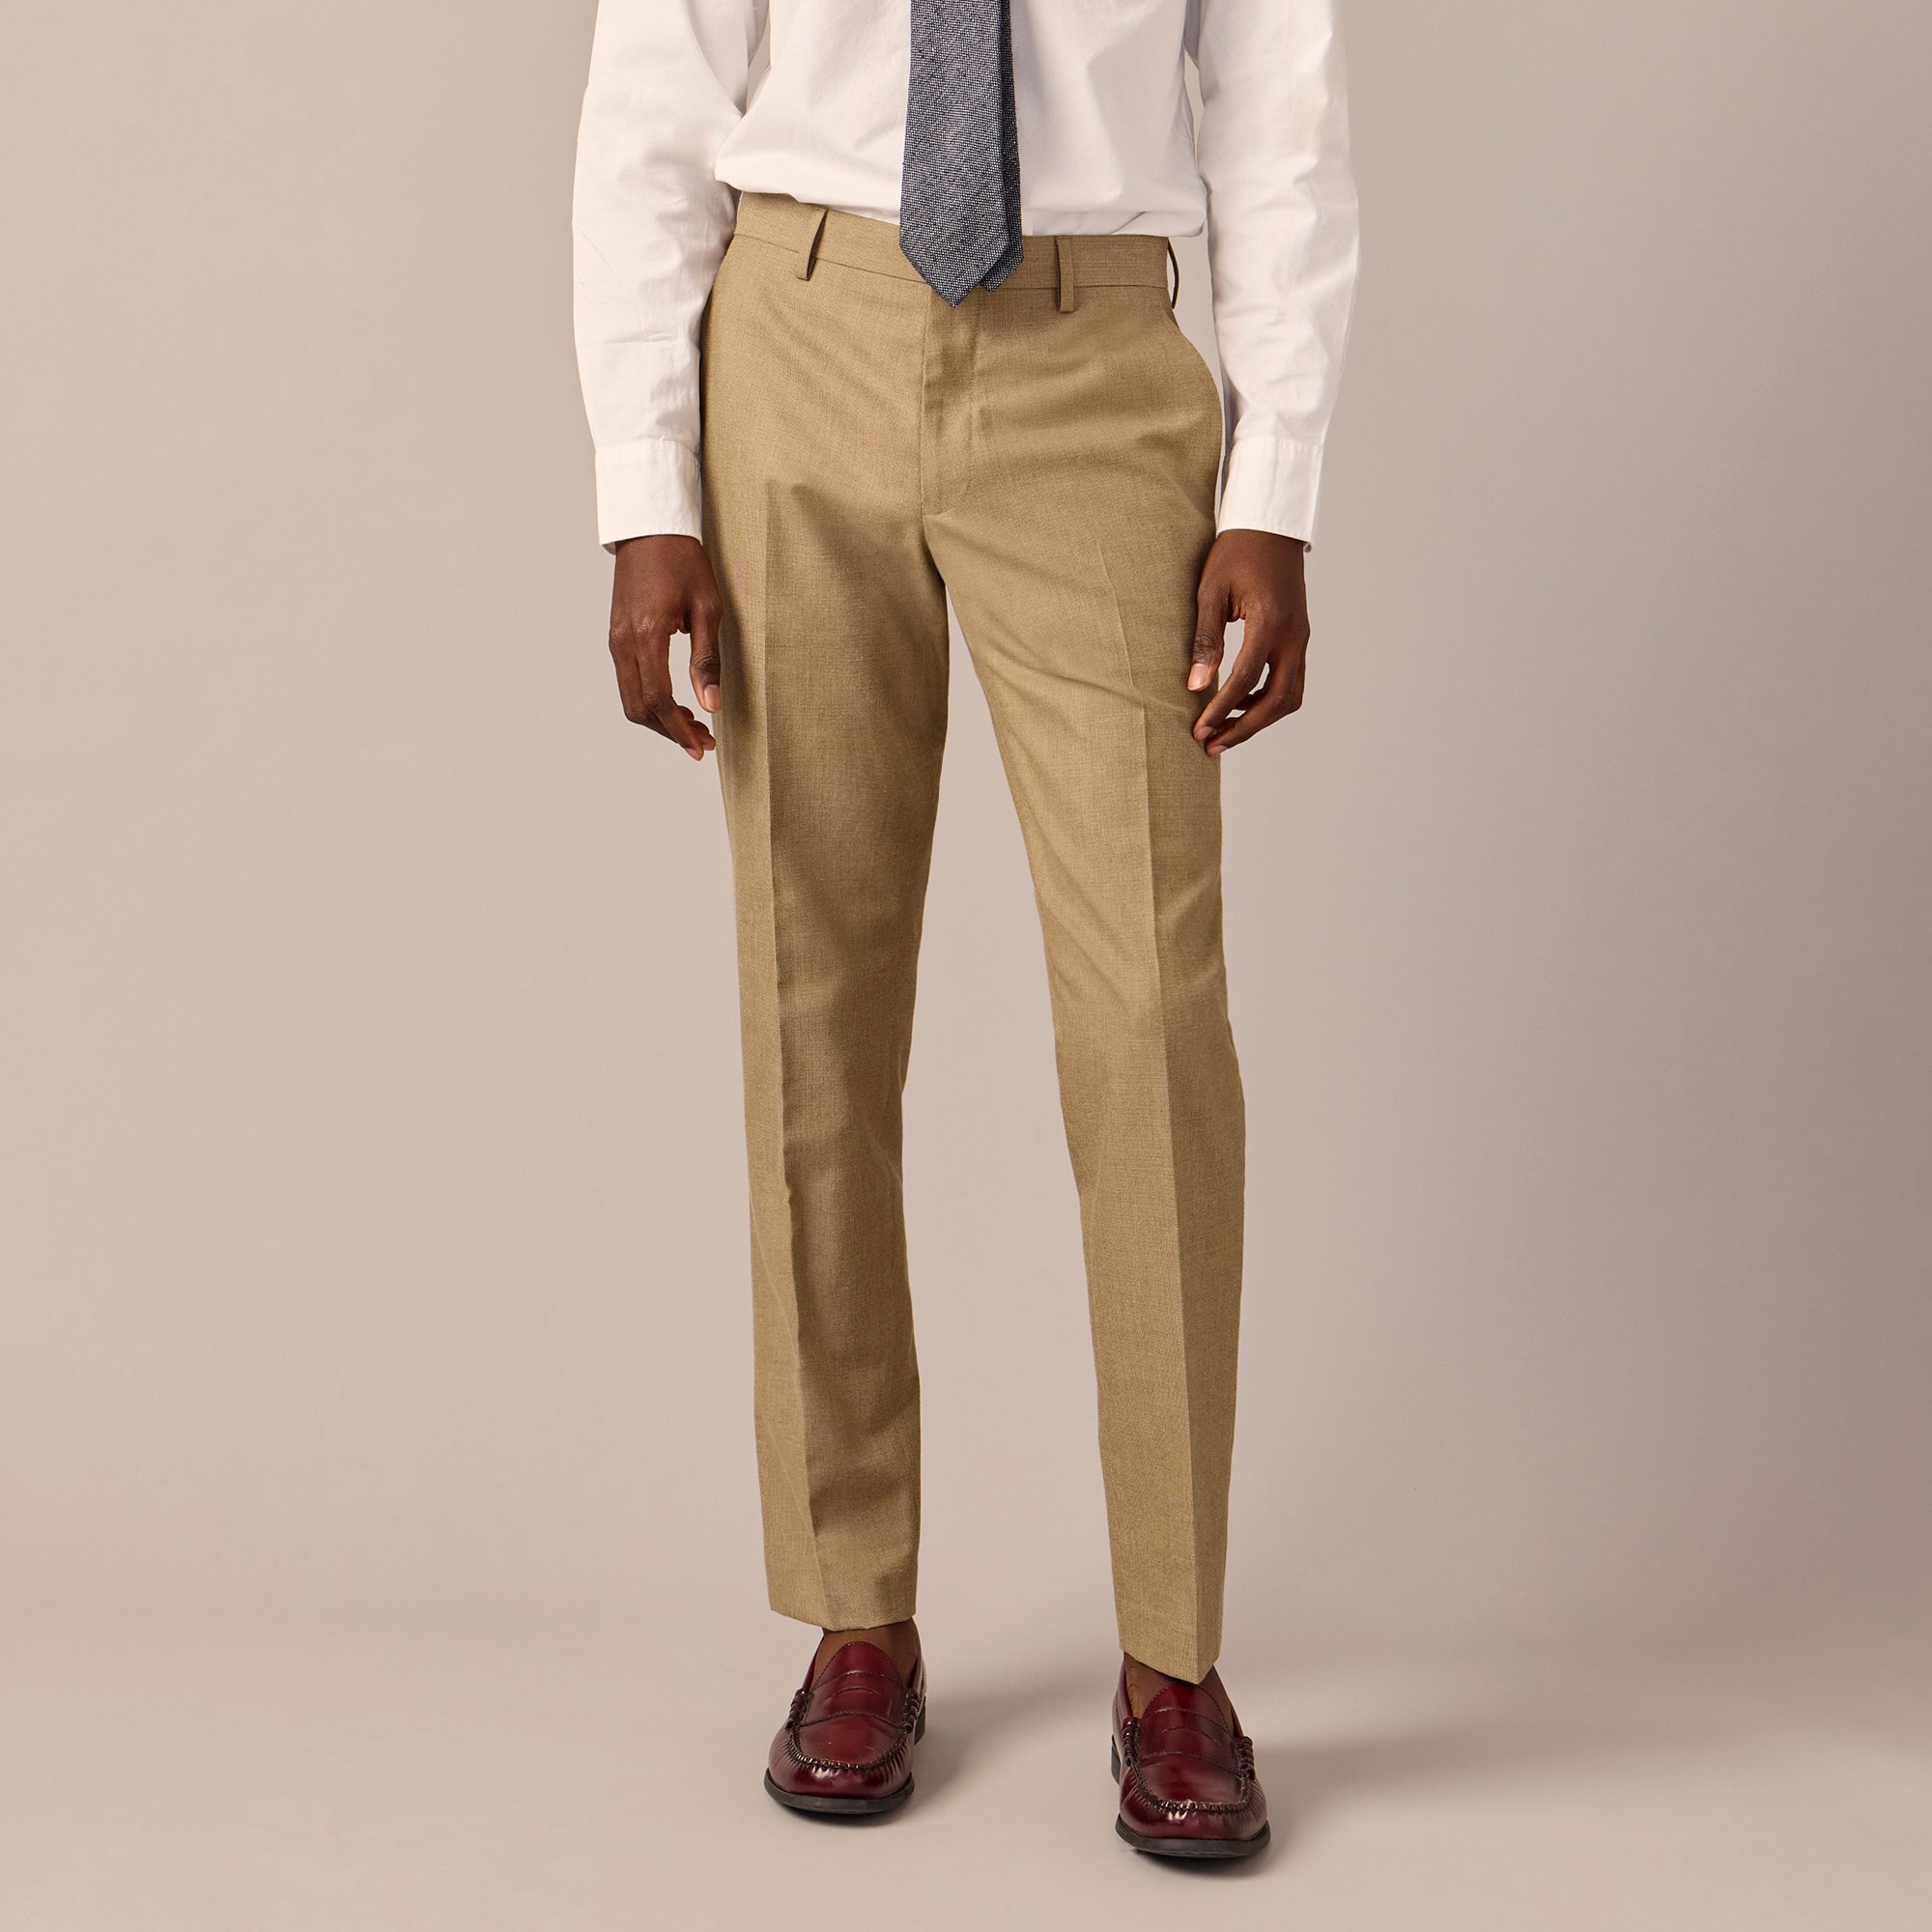 Jcrew Ludlow Slim-fit suit pant in English cotton-wool blend